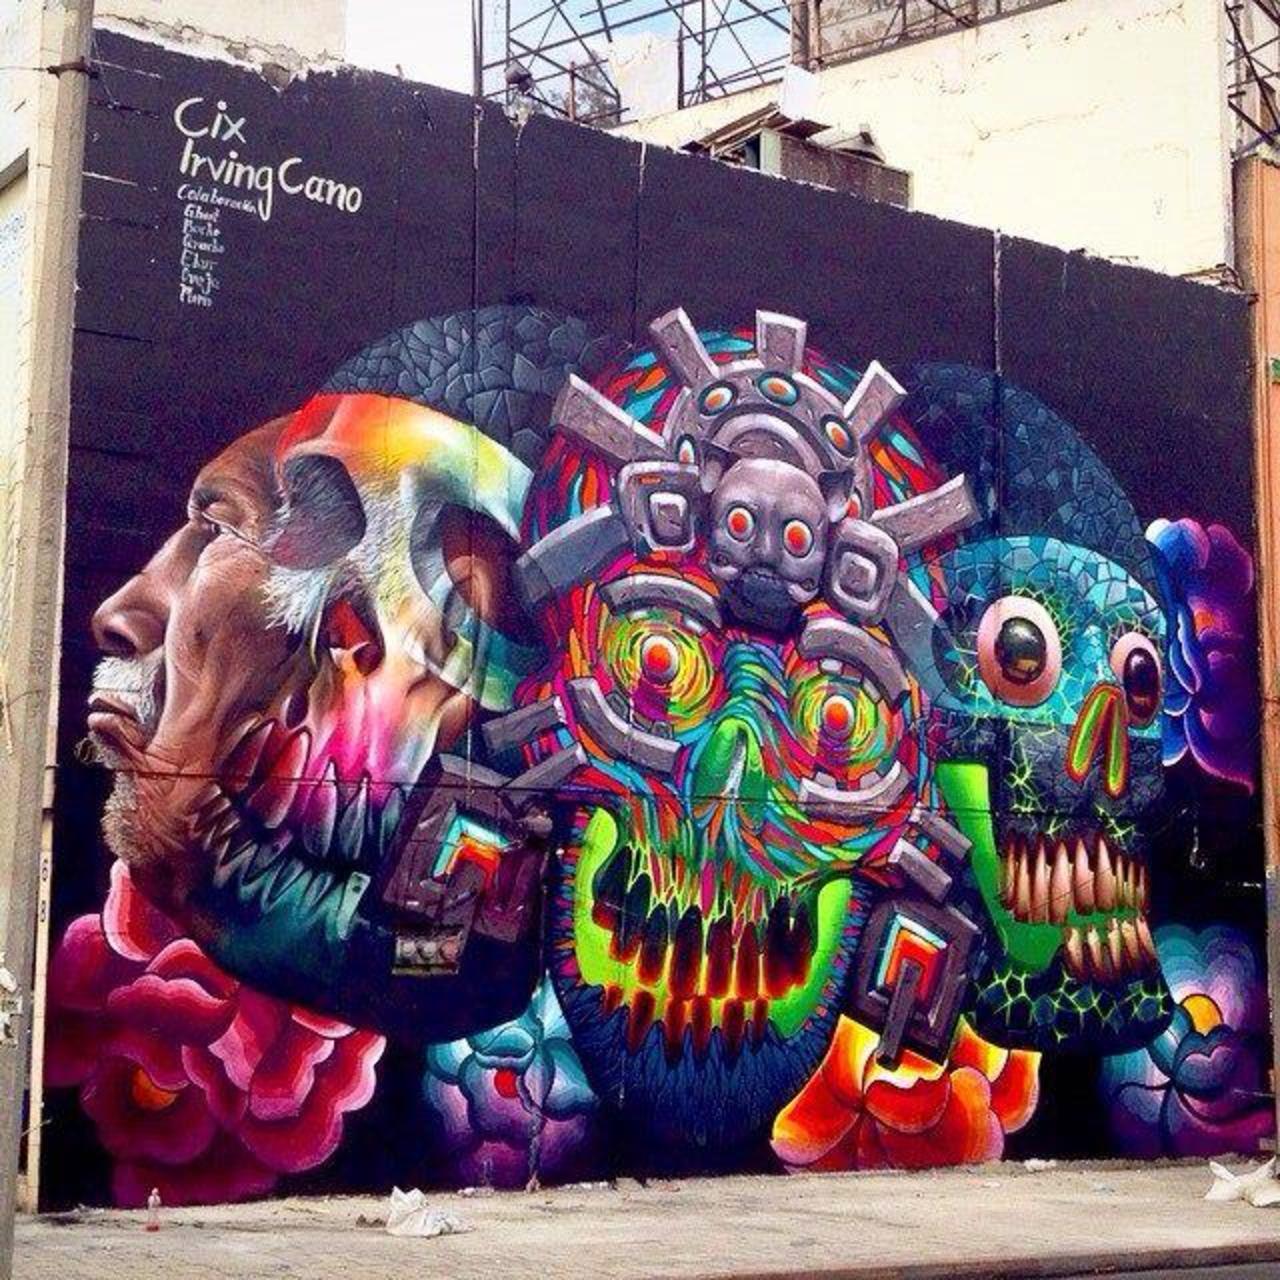 New Street Art by Irving Cano and Cix in México.

#art #arte #graffiti #streetart http://t.co/PCUTSNmG6d